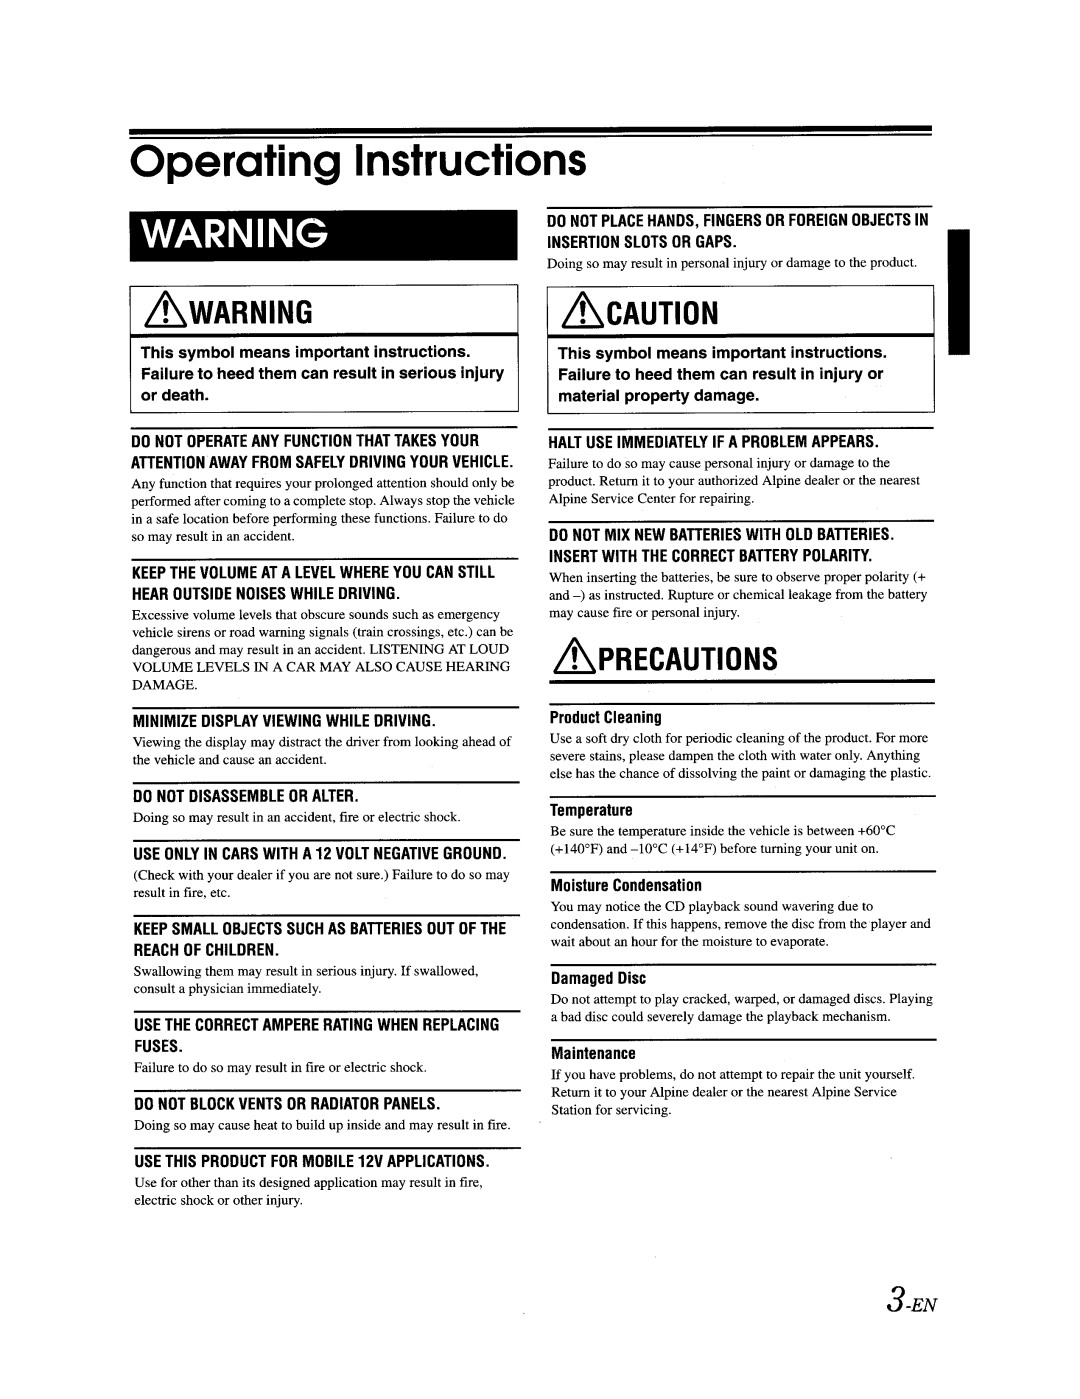 Alpine CDA-9887 owner manual 3-EN, Operating Instructions, Warning, Caution, Precautions 